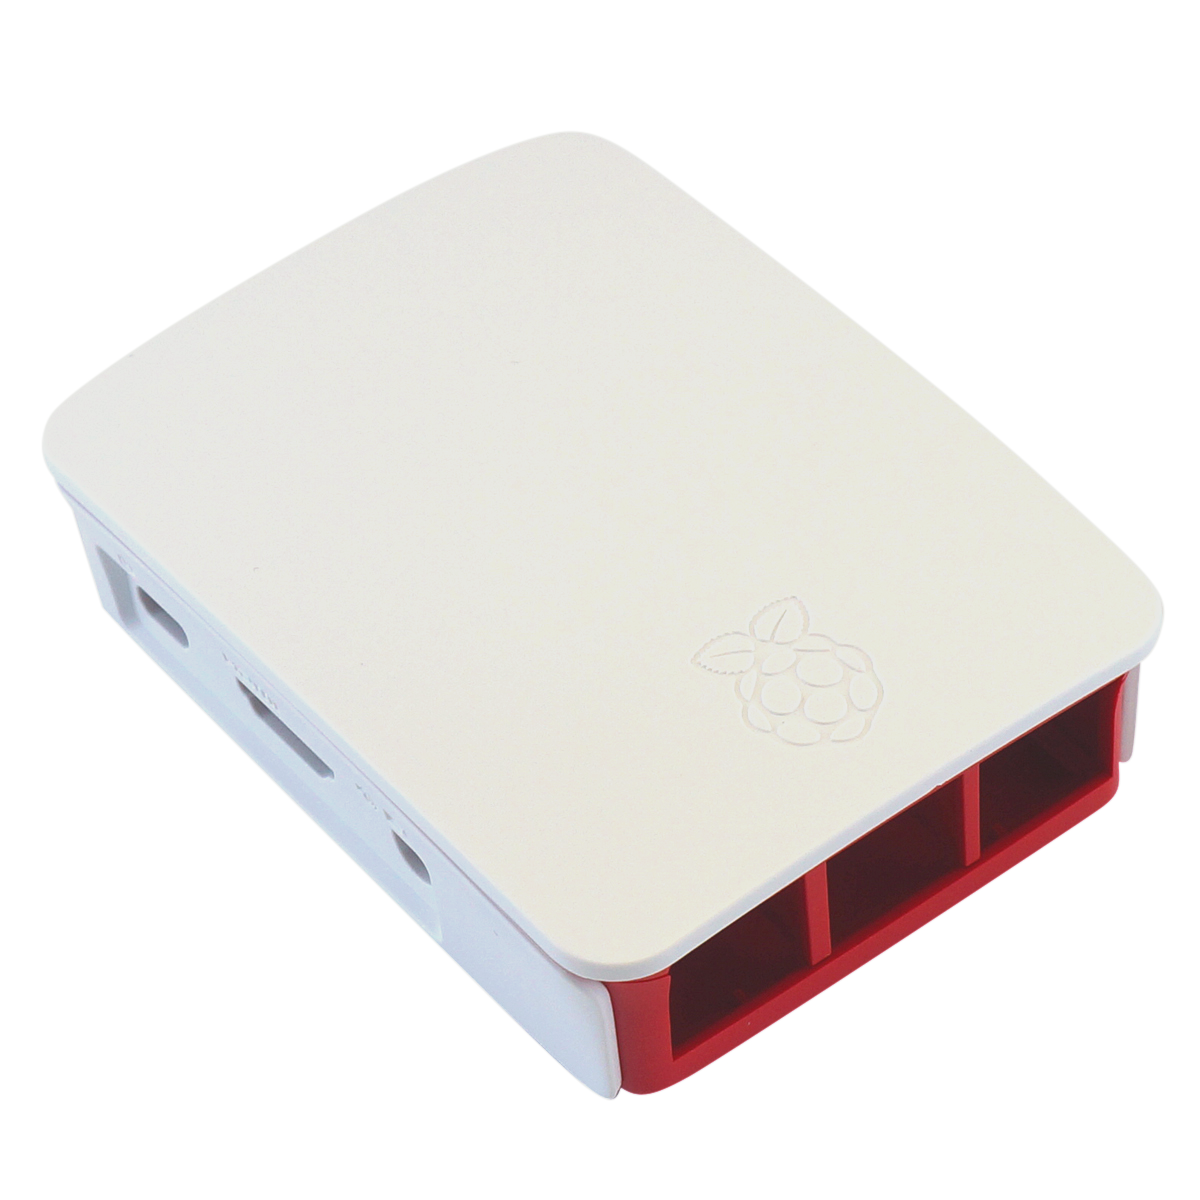 Raspberry Pi Case for Raspberry Pi 3 B Red/White (RASPBERRY-PI3-CASE)